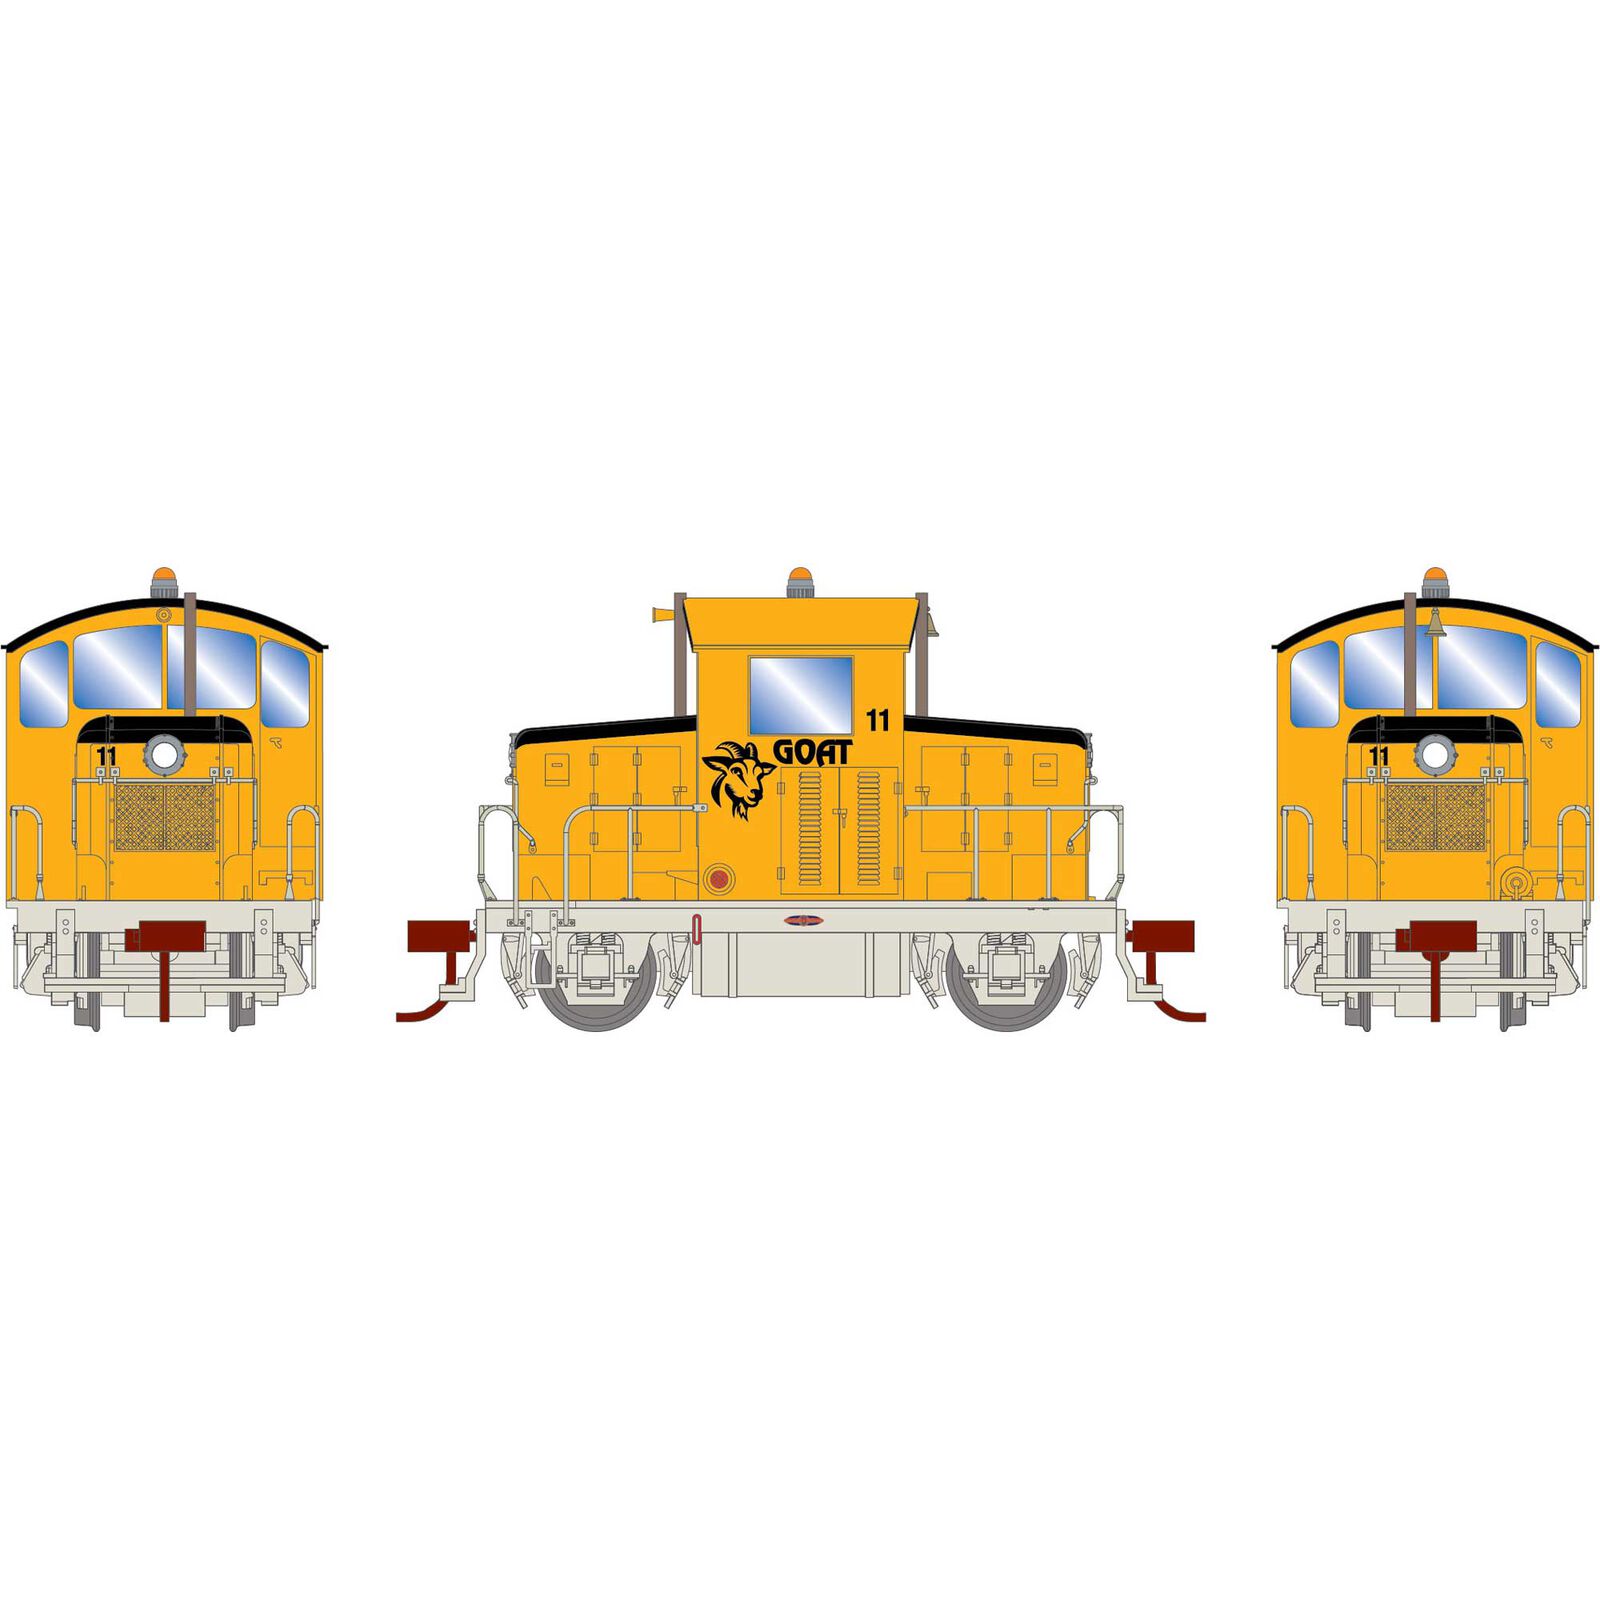 HO EMD Model 40 Locomotive, Yellow Shop Goat #11